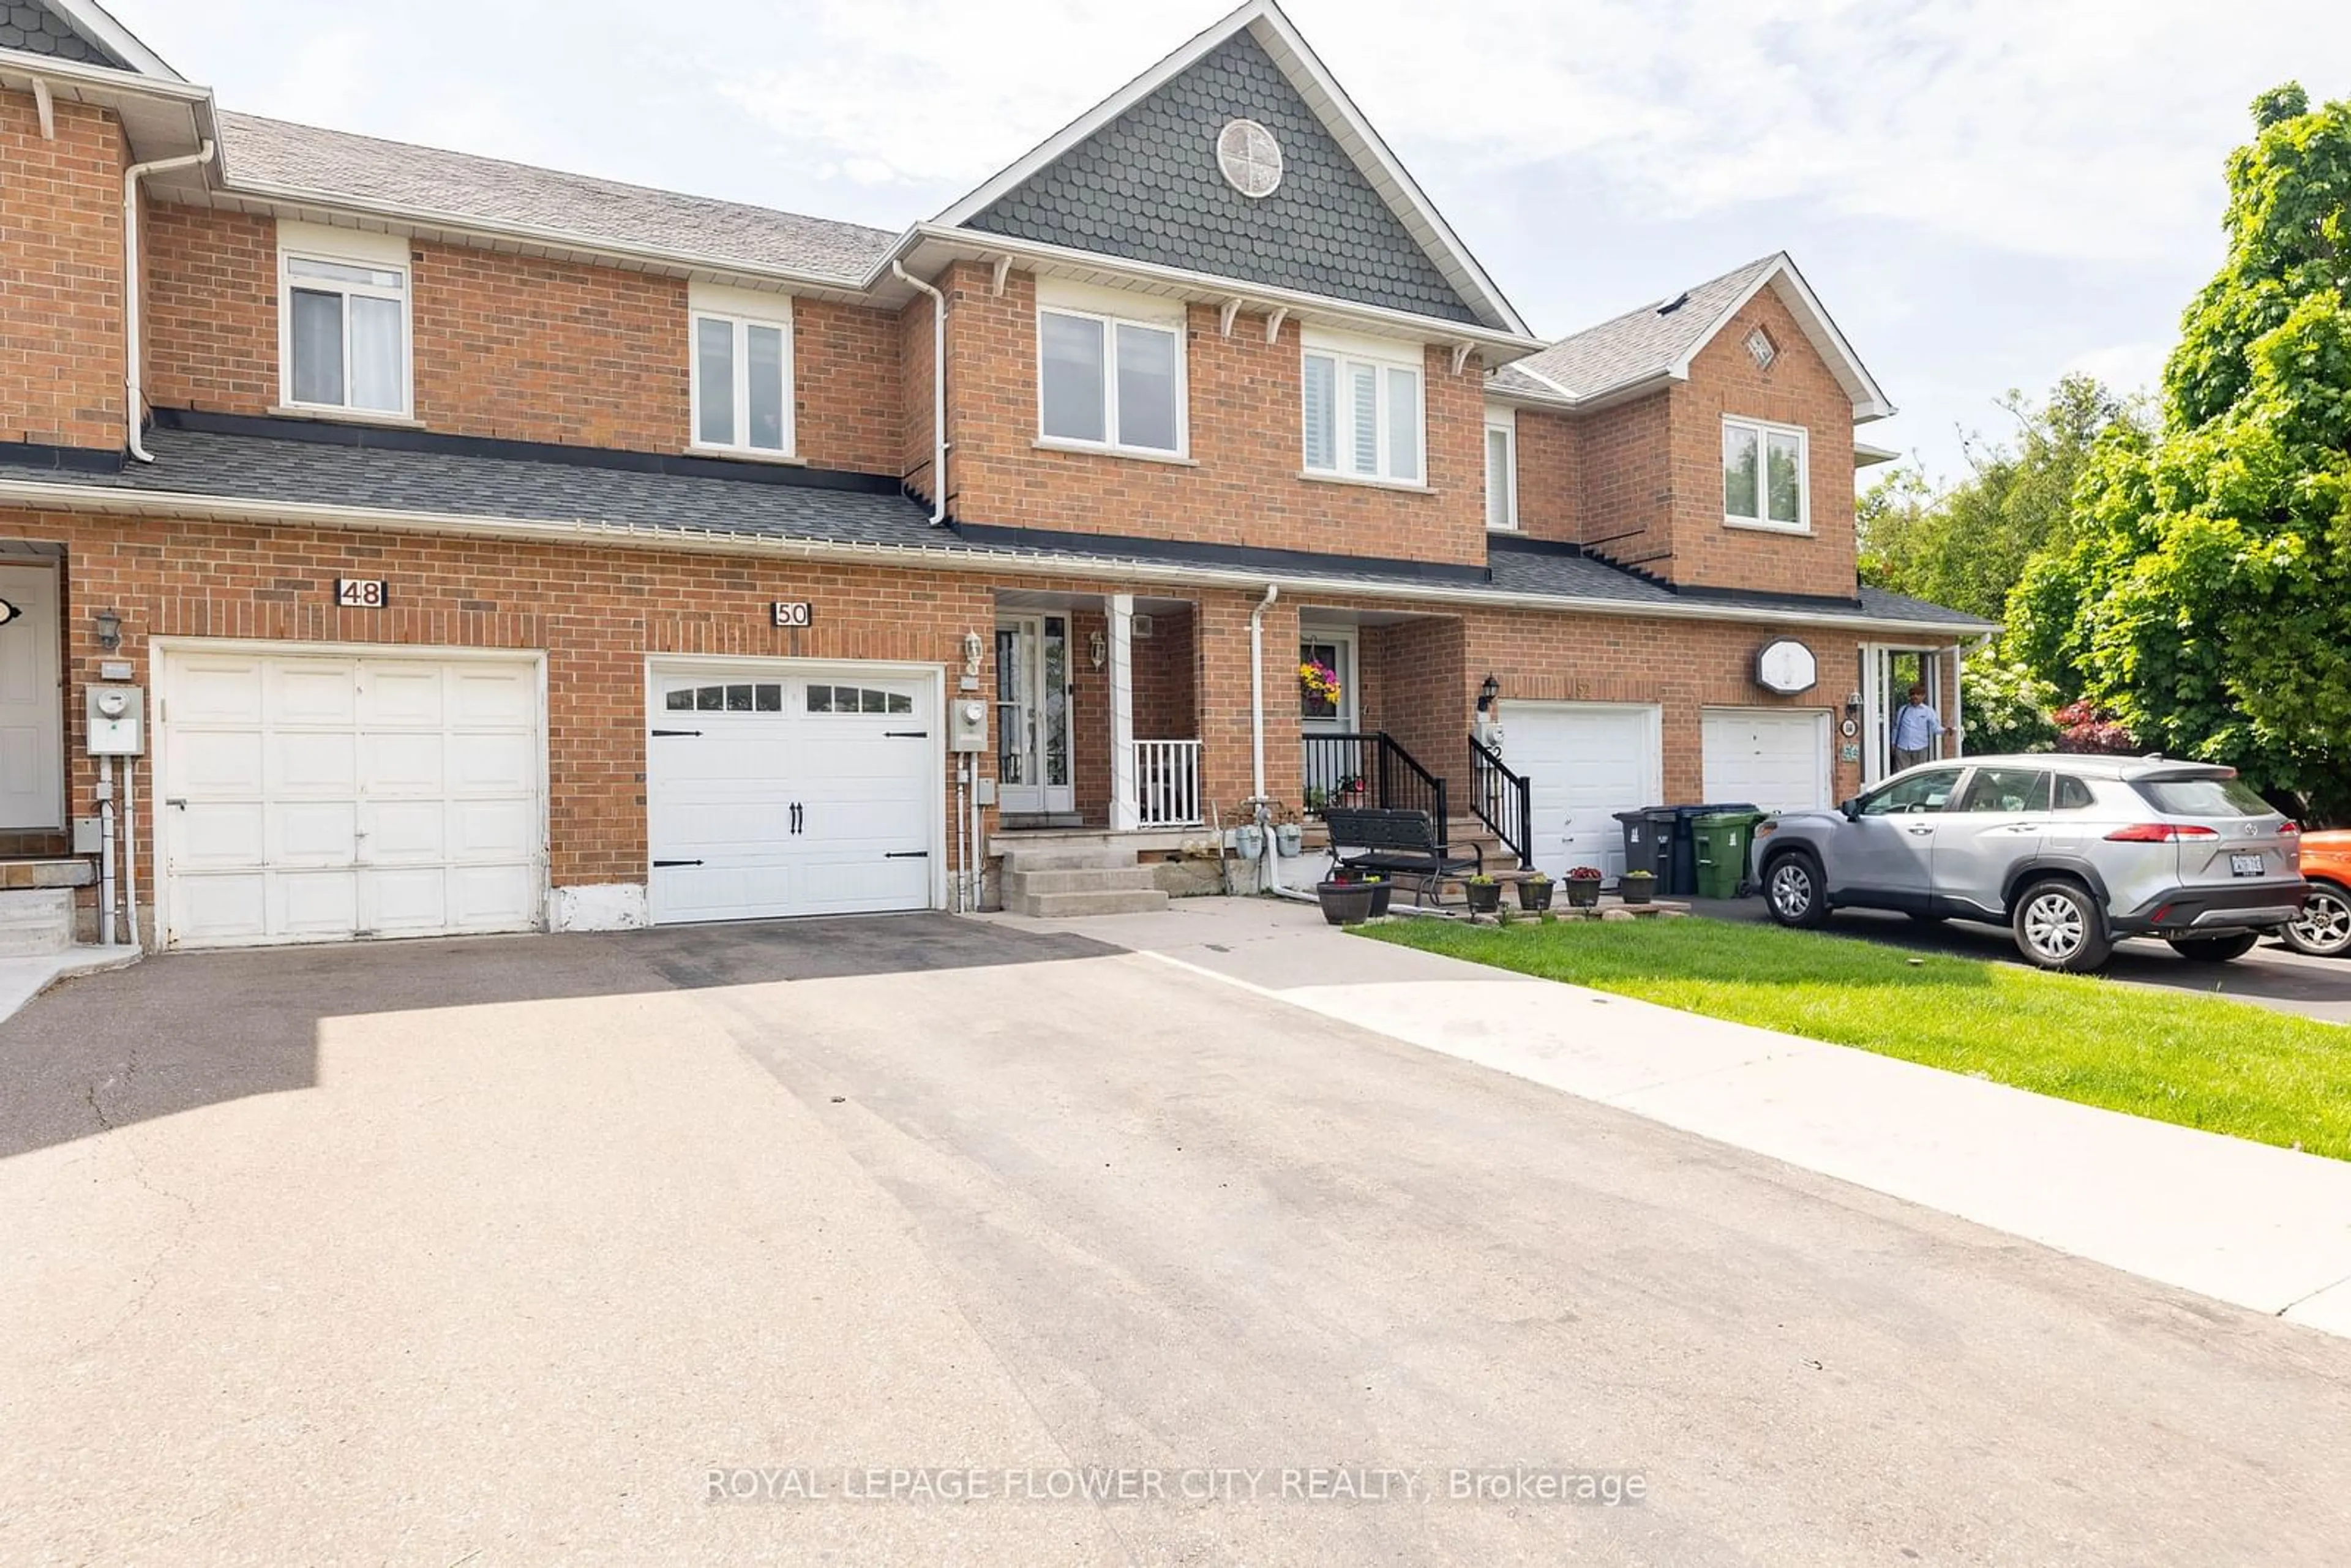 Home with brick exterior material for 50 Mattari Crt, Toronto Ontario M9W 7C6